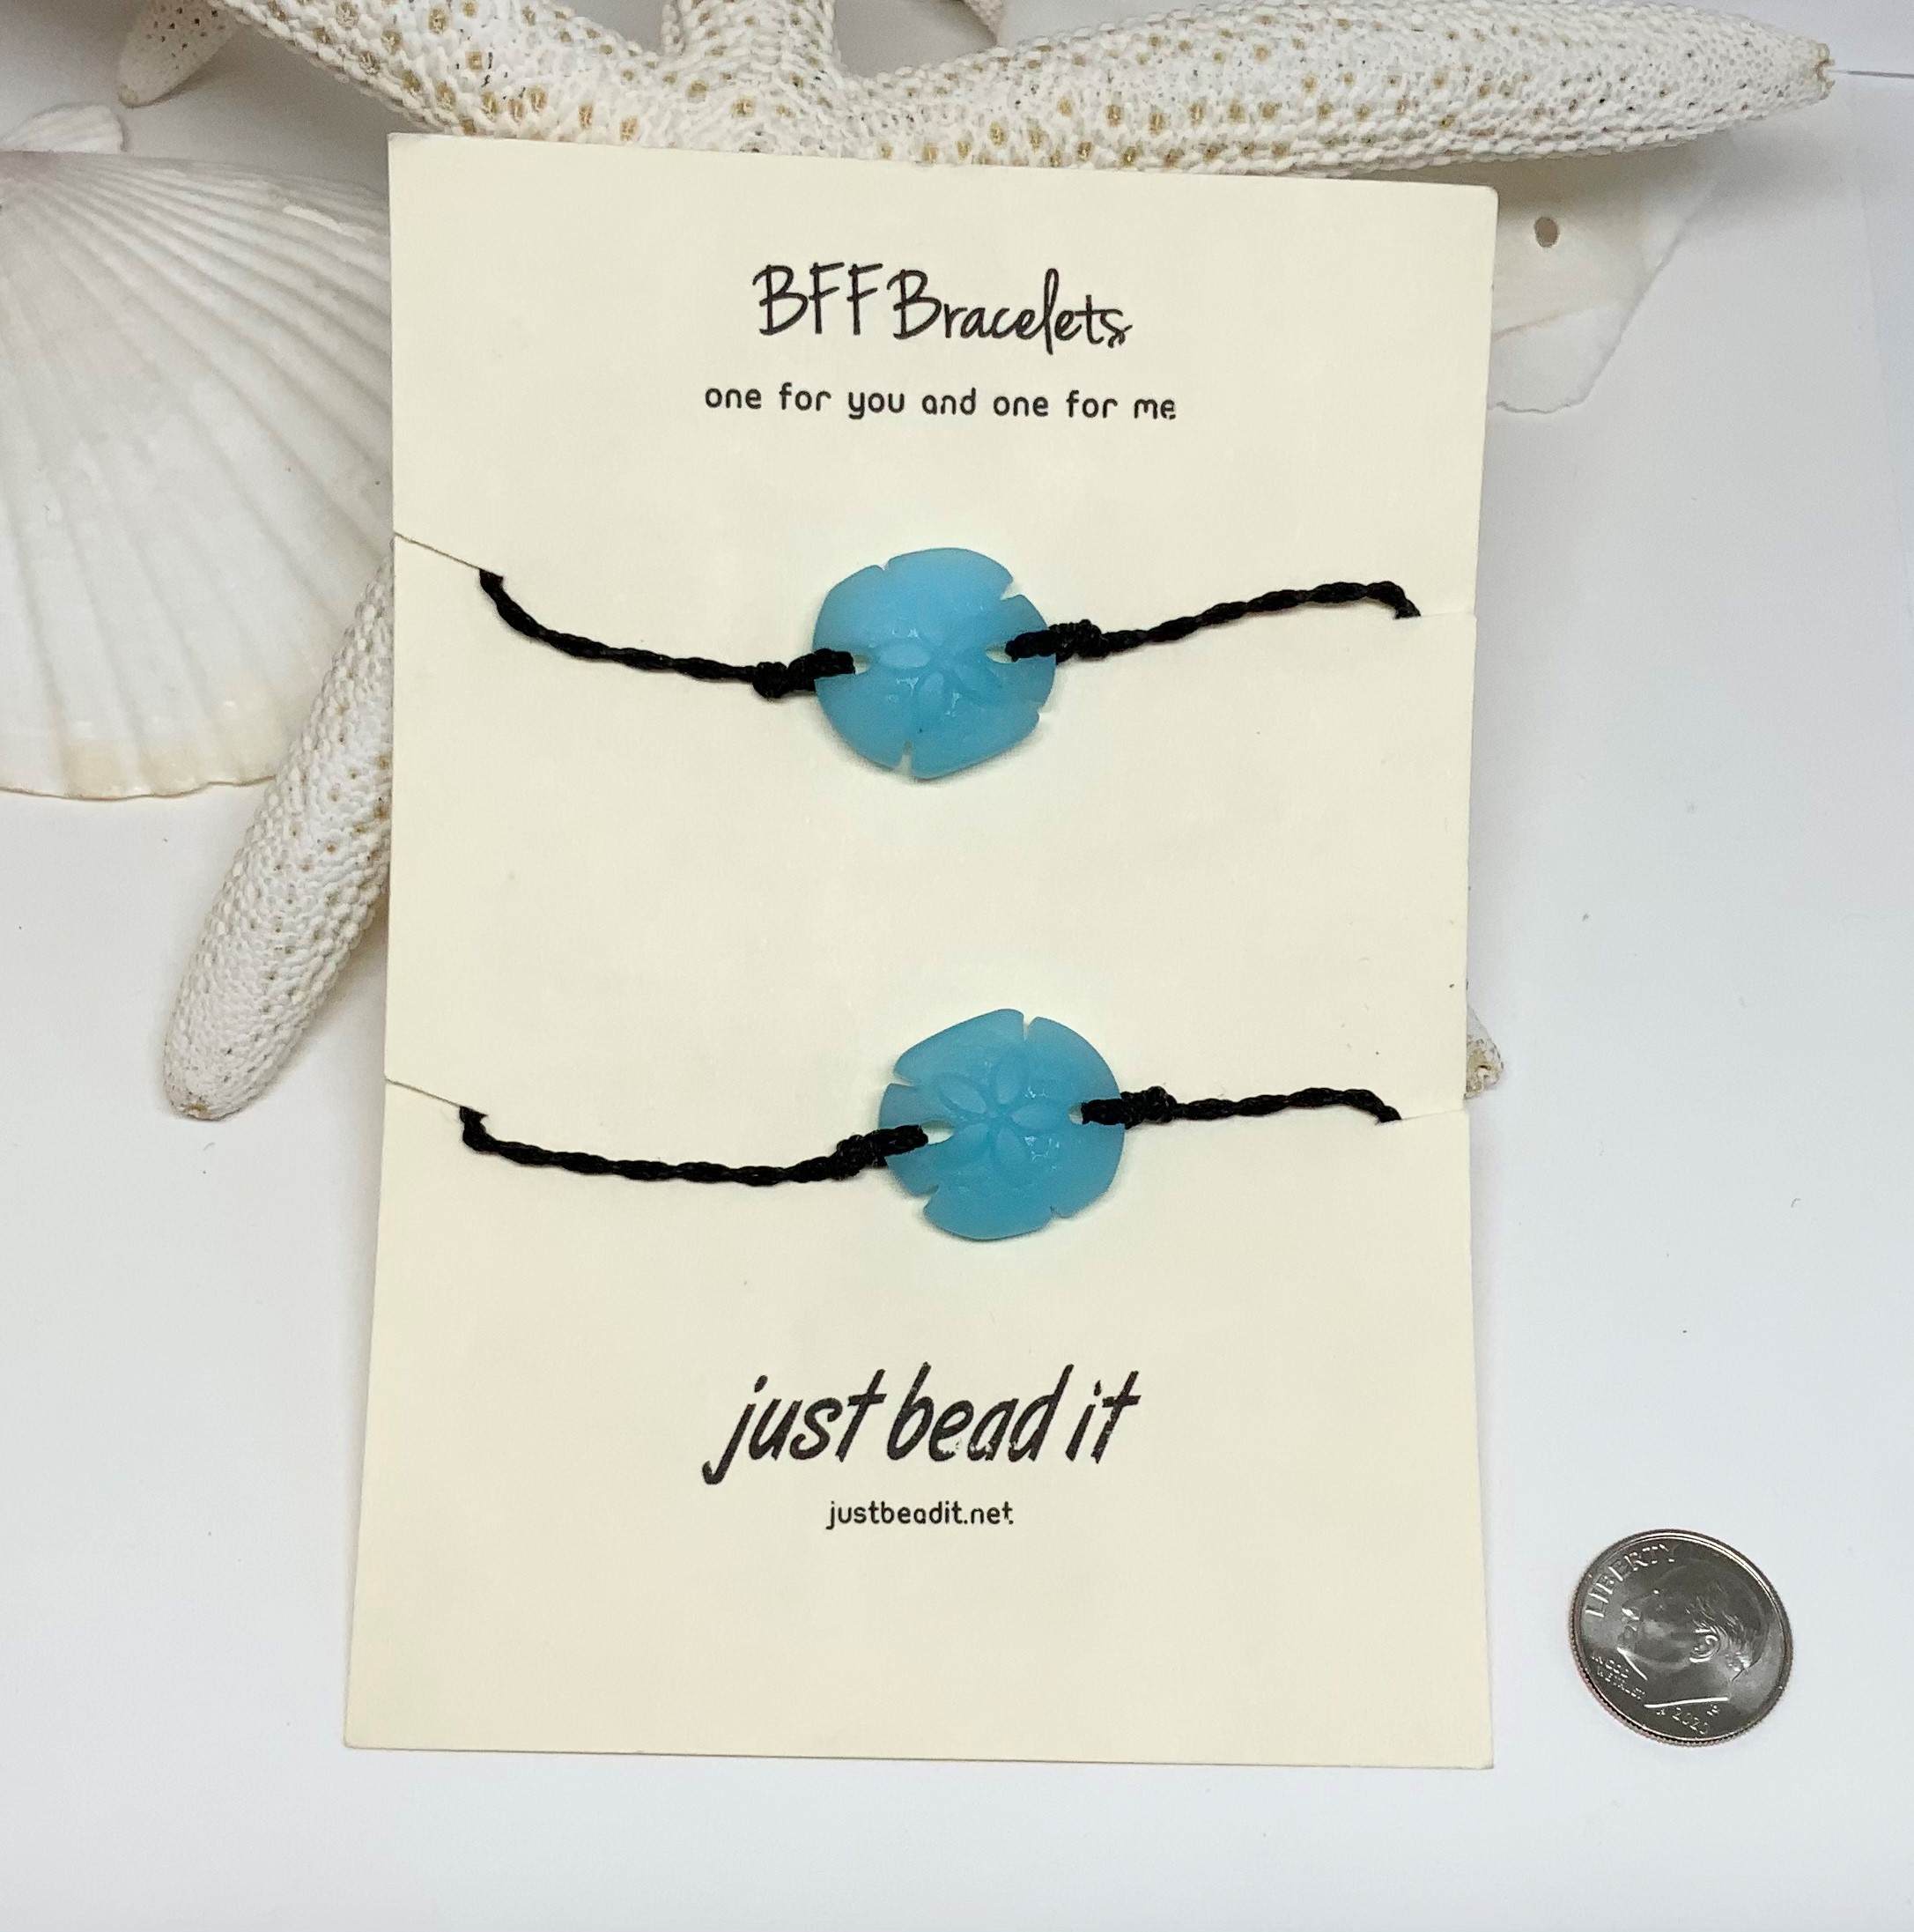 Friendship Bracelets 102: Over 50 Bracelets to Make & Share: 3442 (Design  Originals) : McNeill, Suzanne: Amazon.in: Books